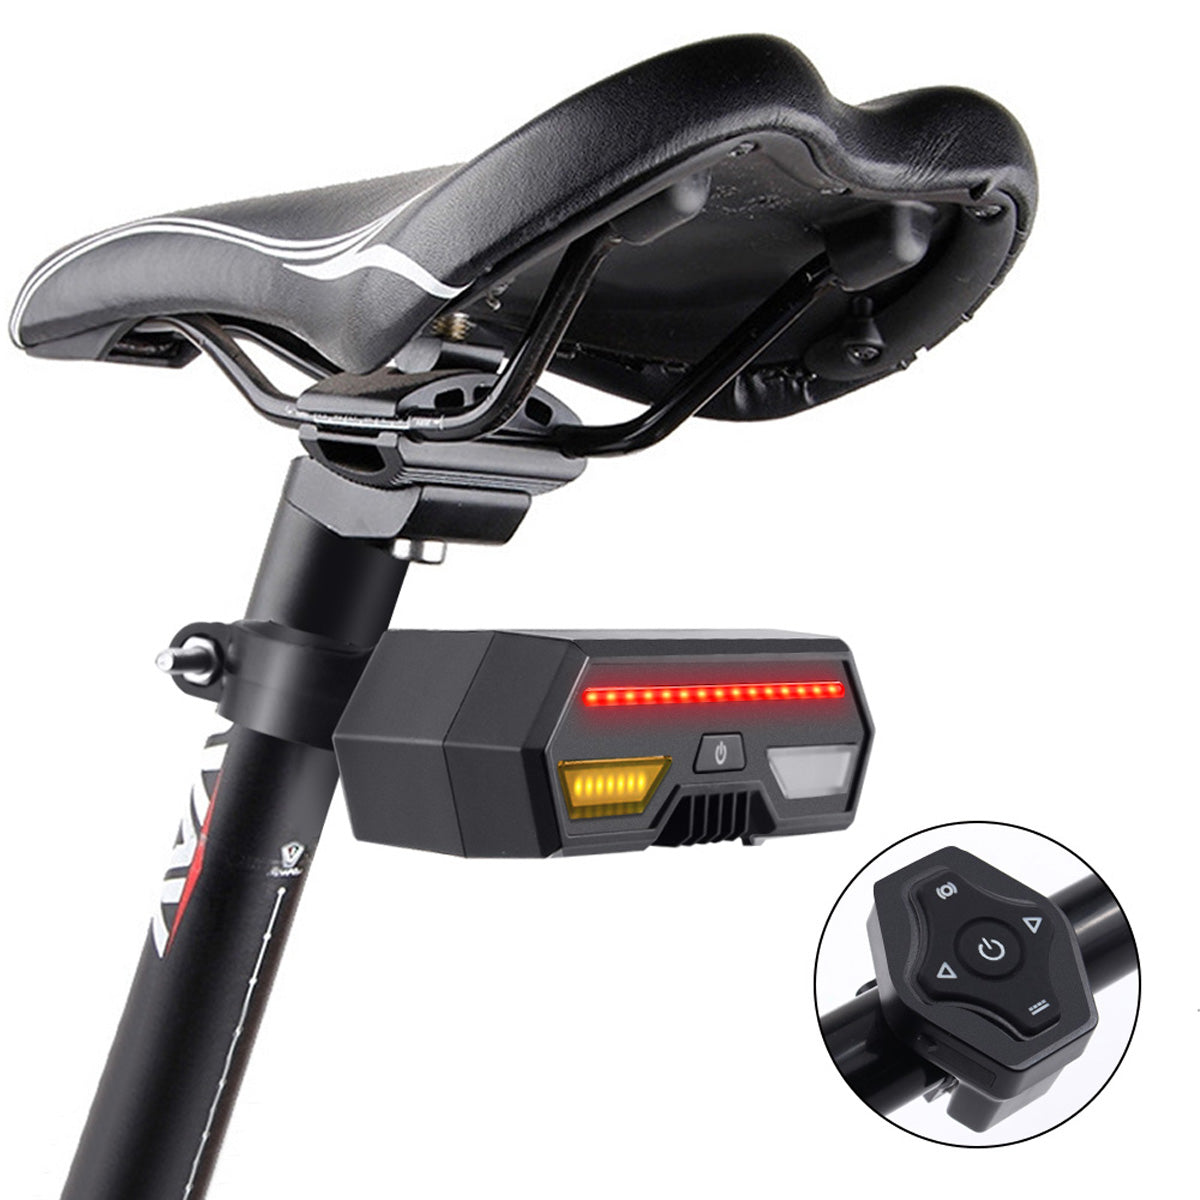 XANES STL09 Bike Turn Signal LED Light Cycling Bicycle USB Waterproof Remote Control Bike Tail Light